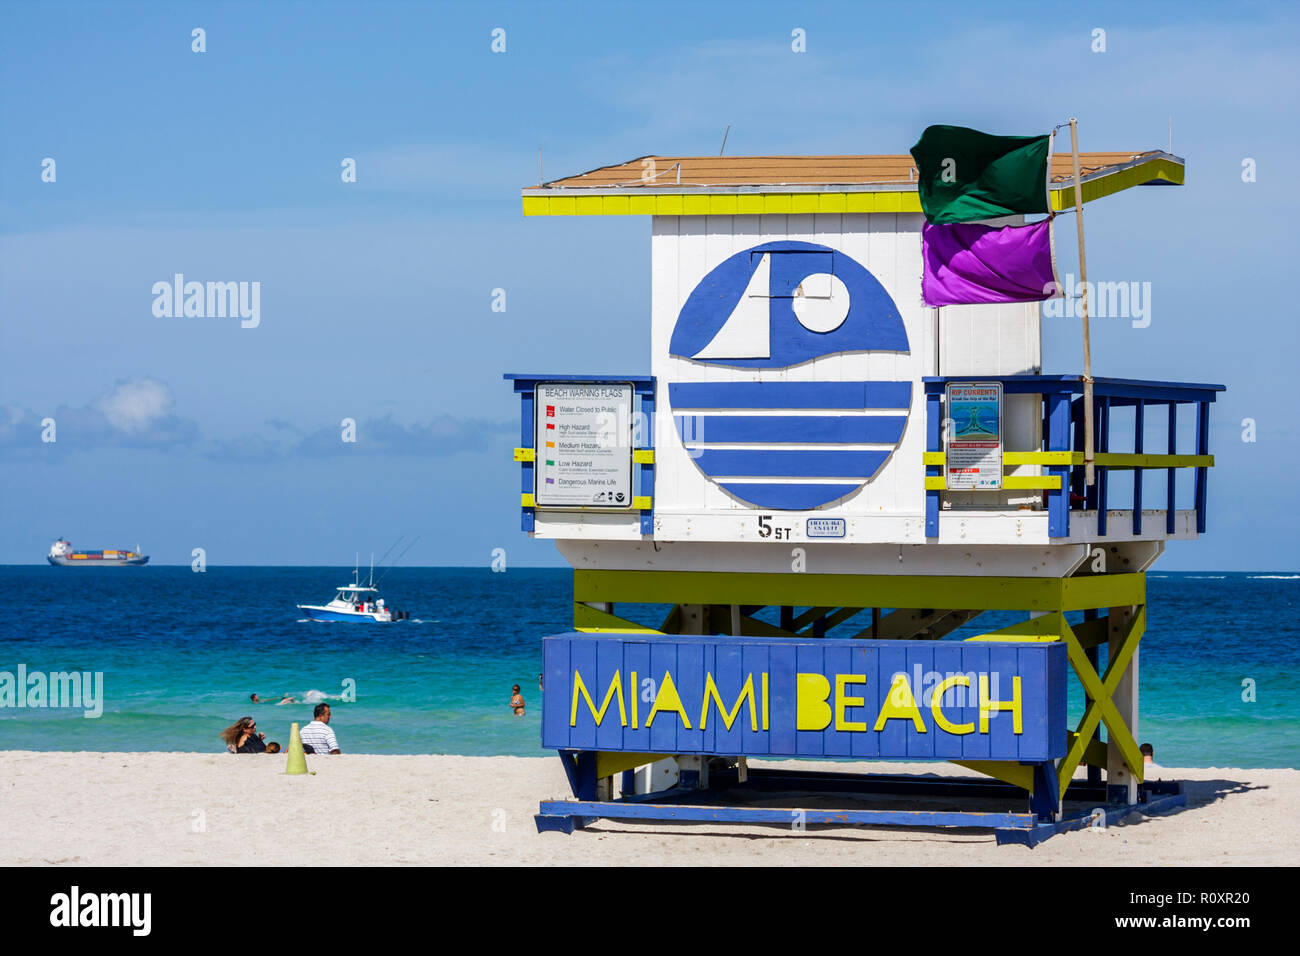 Miami Beach Florida,Atlantic Ocean,water,public beach,lifeguard stand,station,shore,safety,warning flag,purple,green,dangerous marine life,FL090607142 Stock Photo